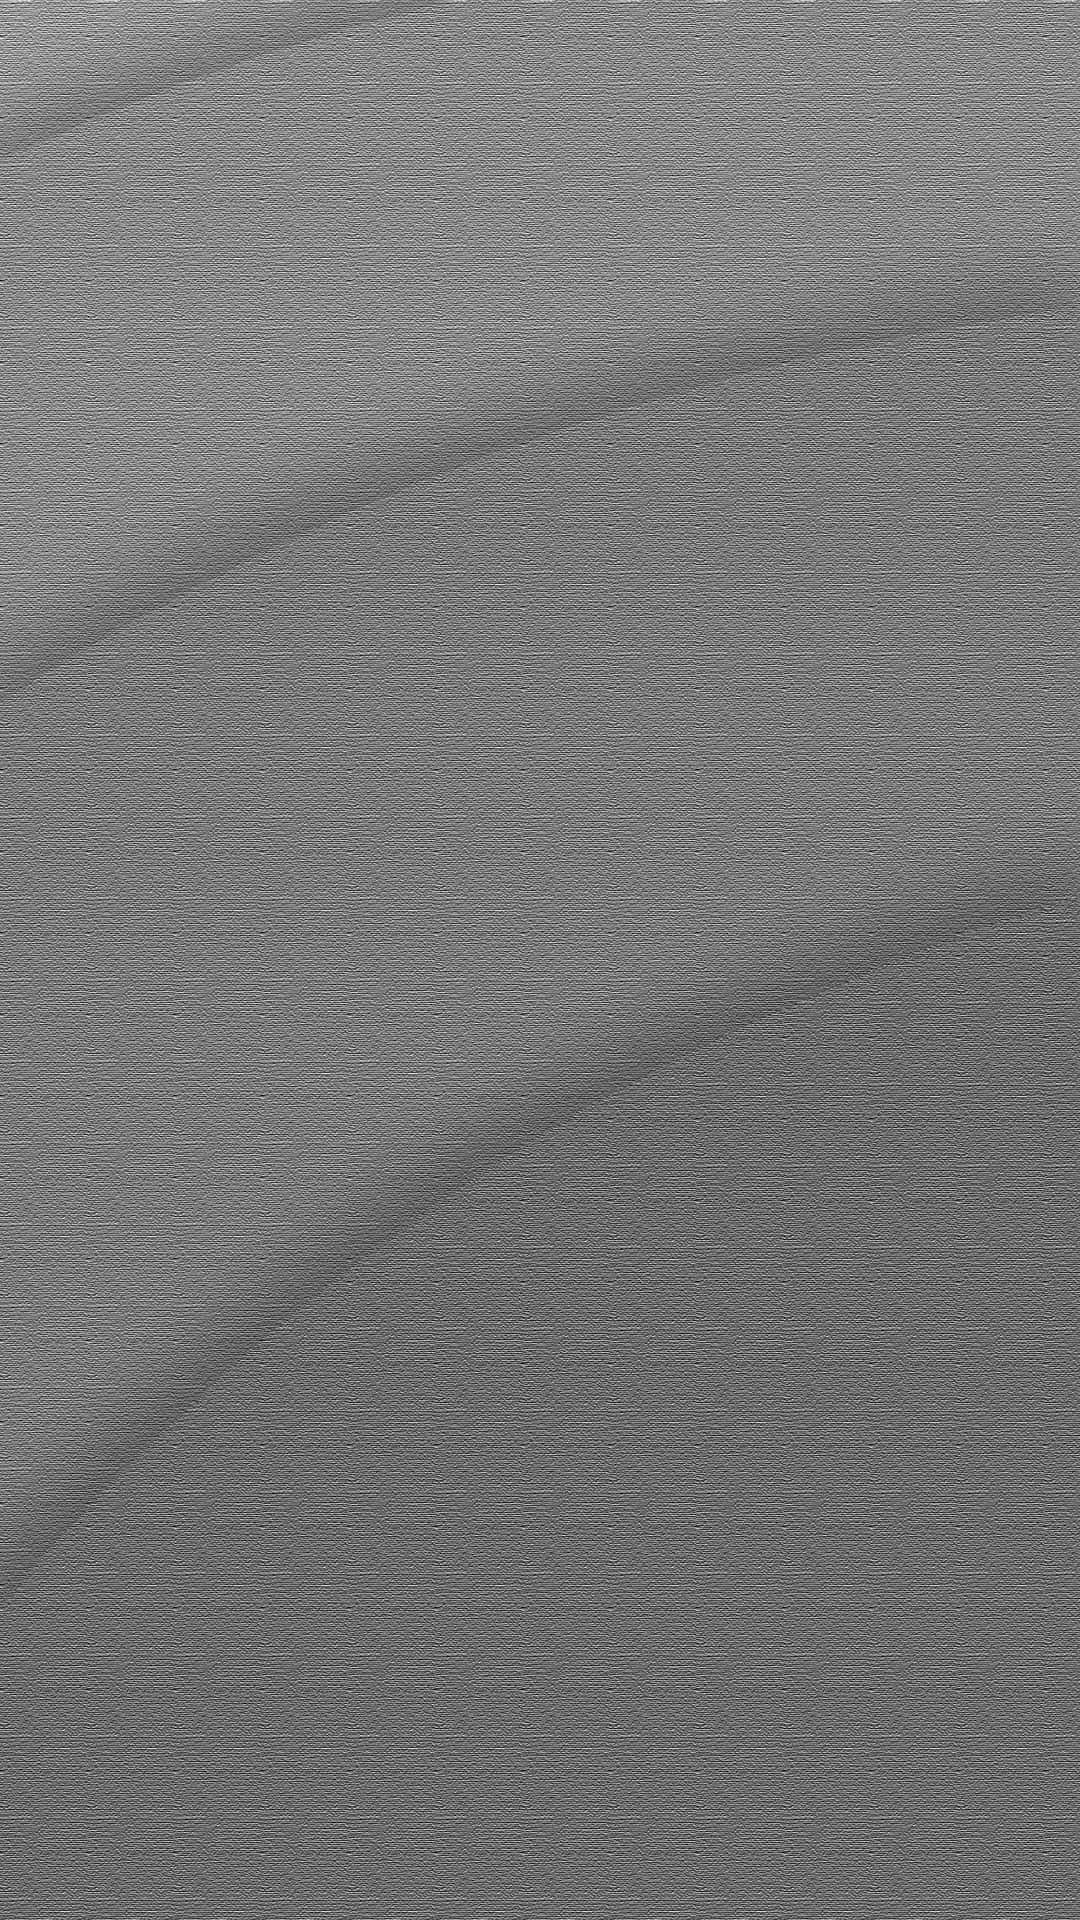 Gray 2160 X 3840 Background